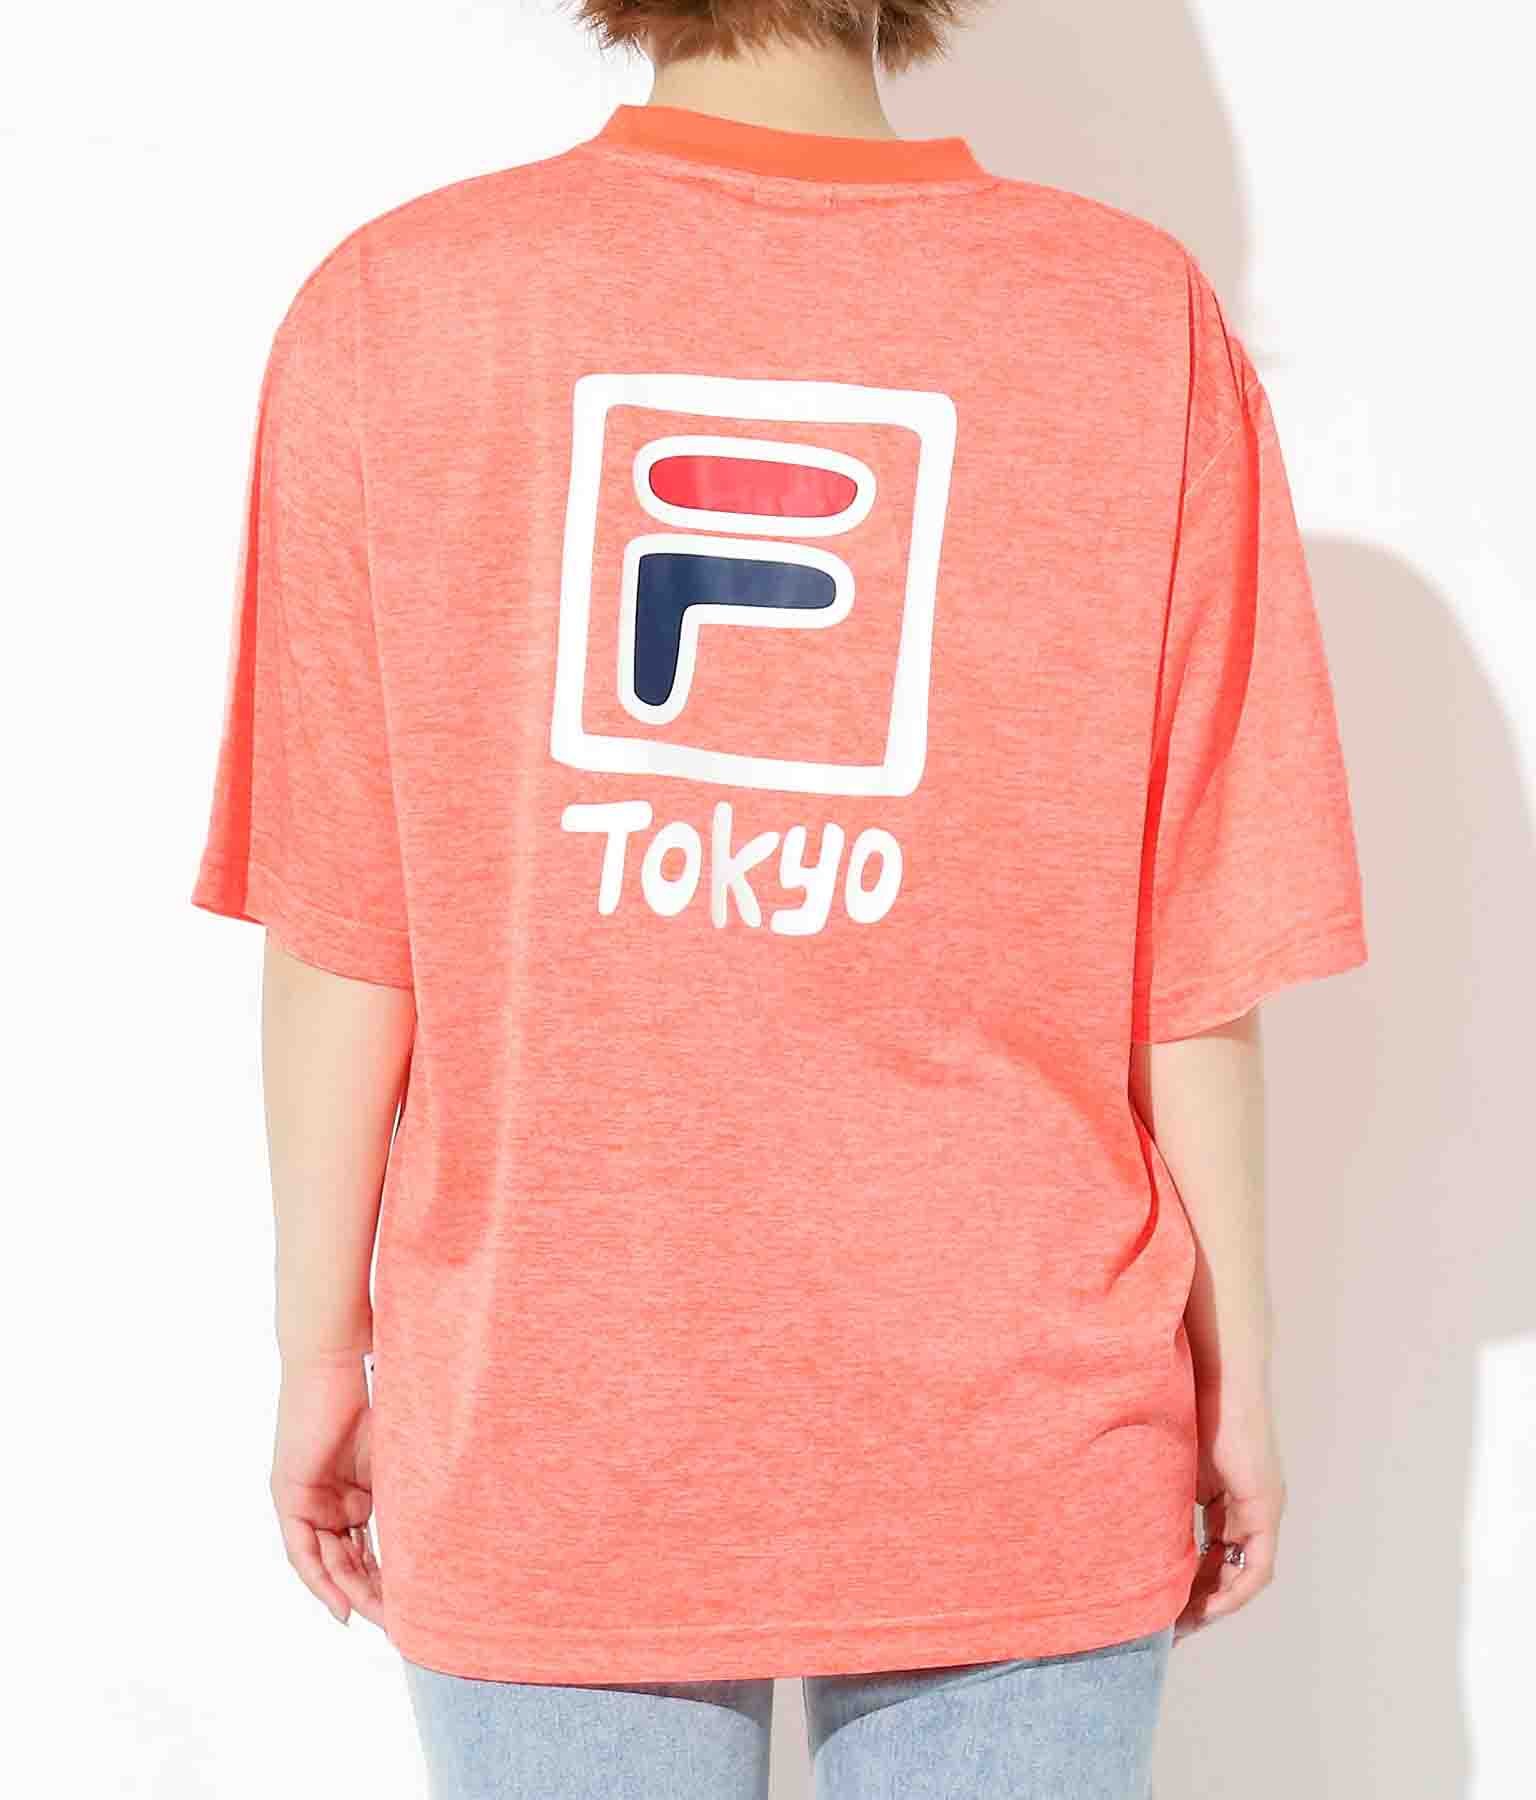 Fila プリントｔシャツ トップス Tシャツ Fila レディースファッション通販anapオンライン